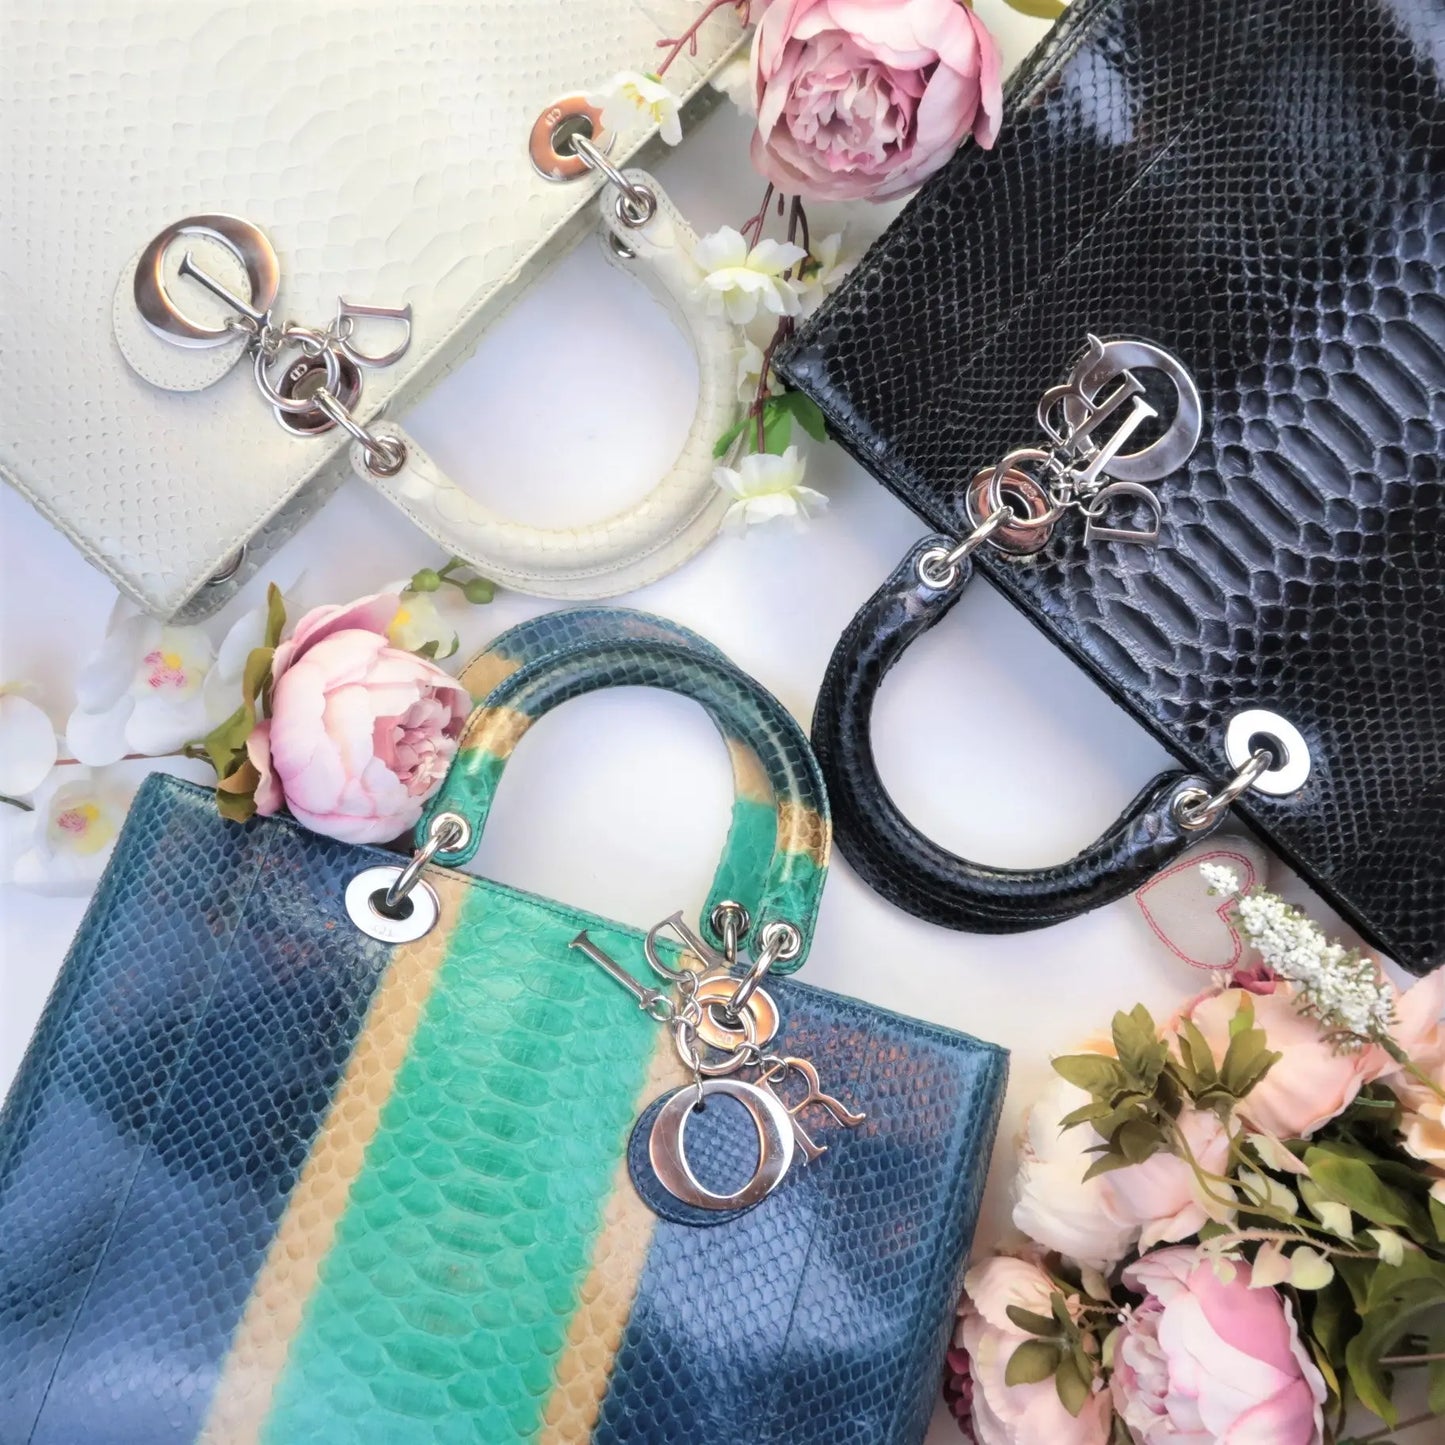 Lady Dior Bag Price List Guide - Brands Blogger